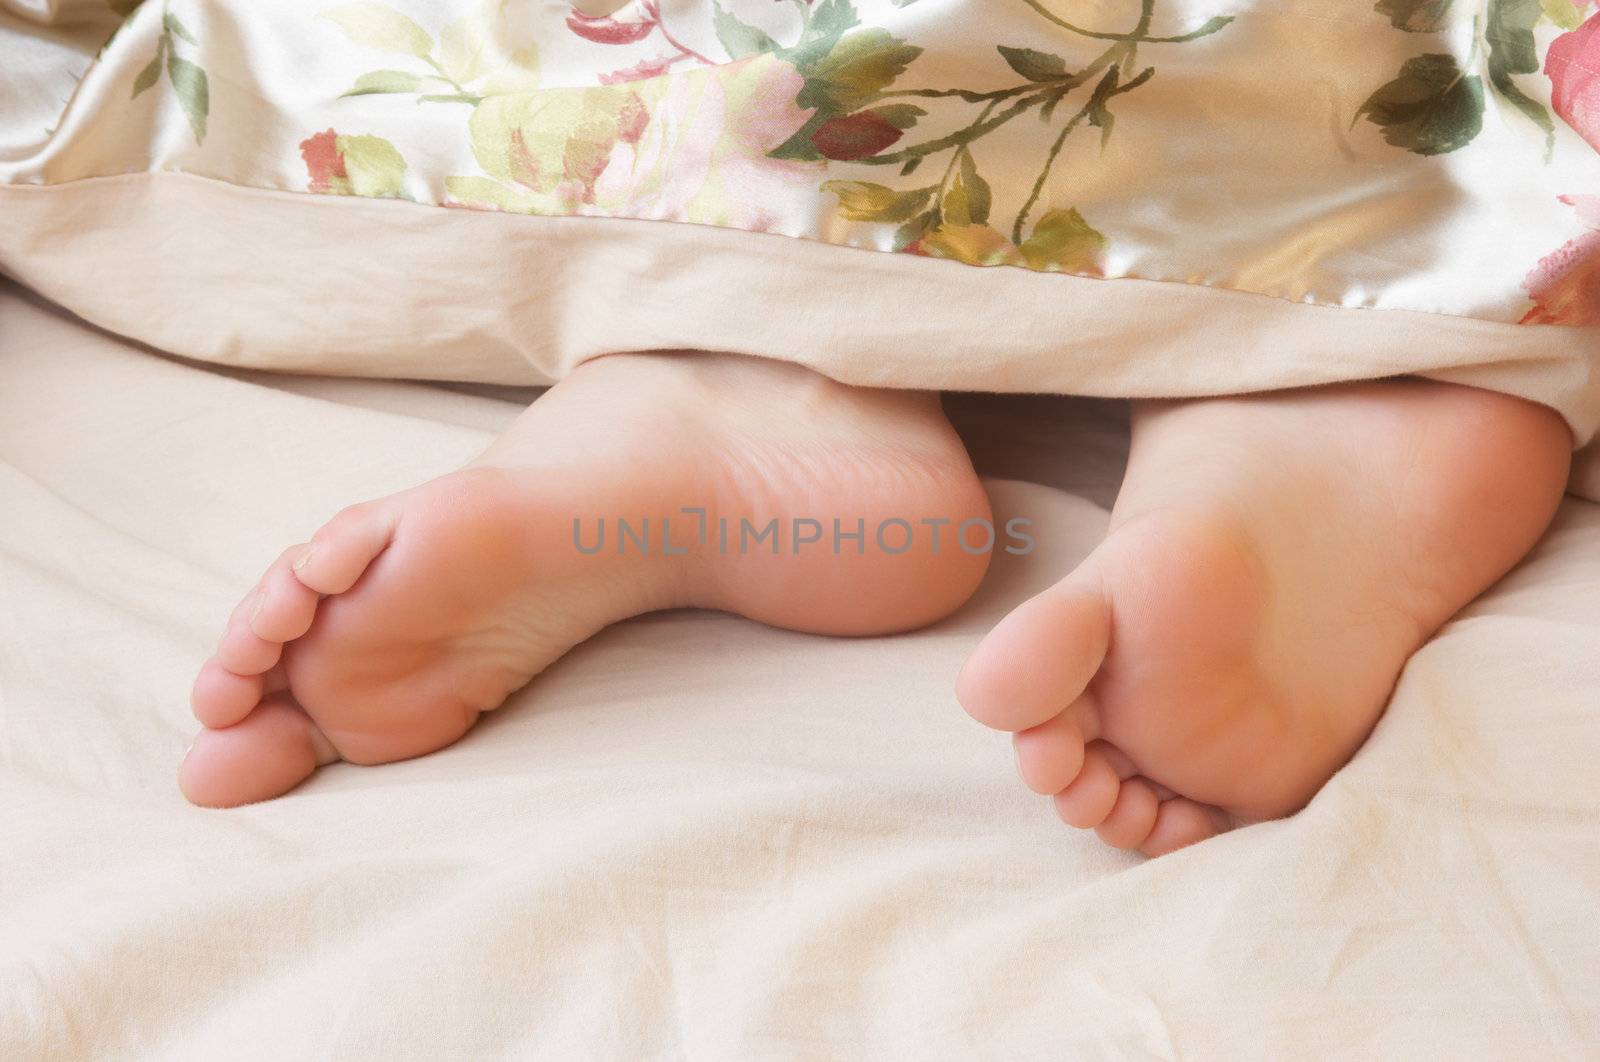 sleeping woman's cute feet, blanket over legs